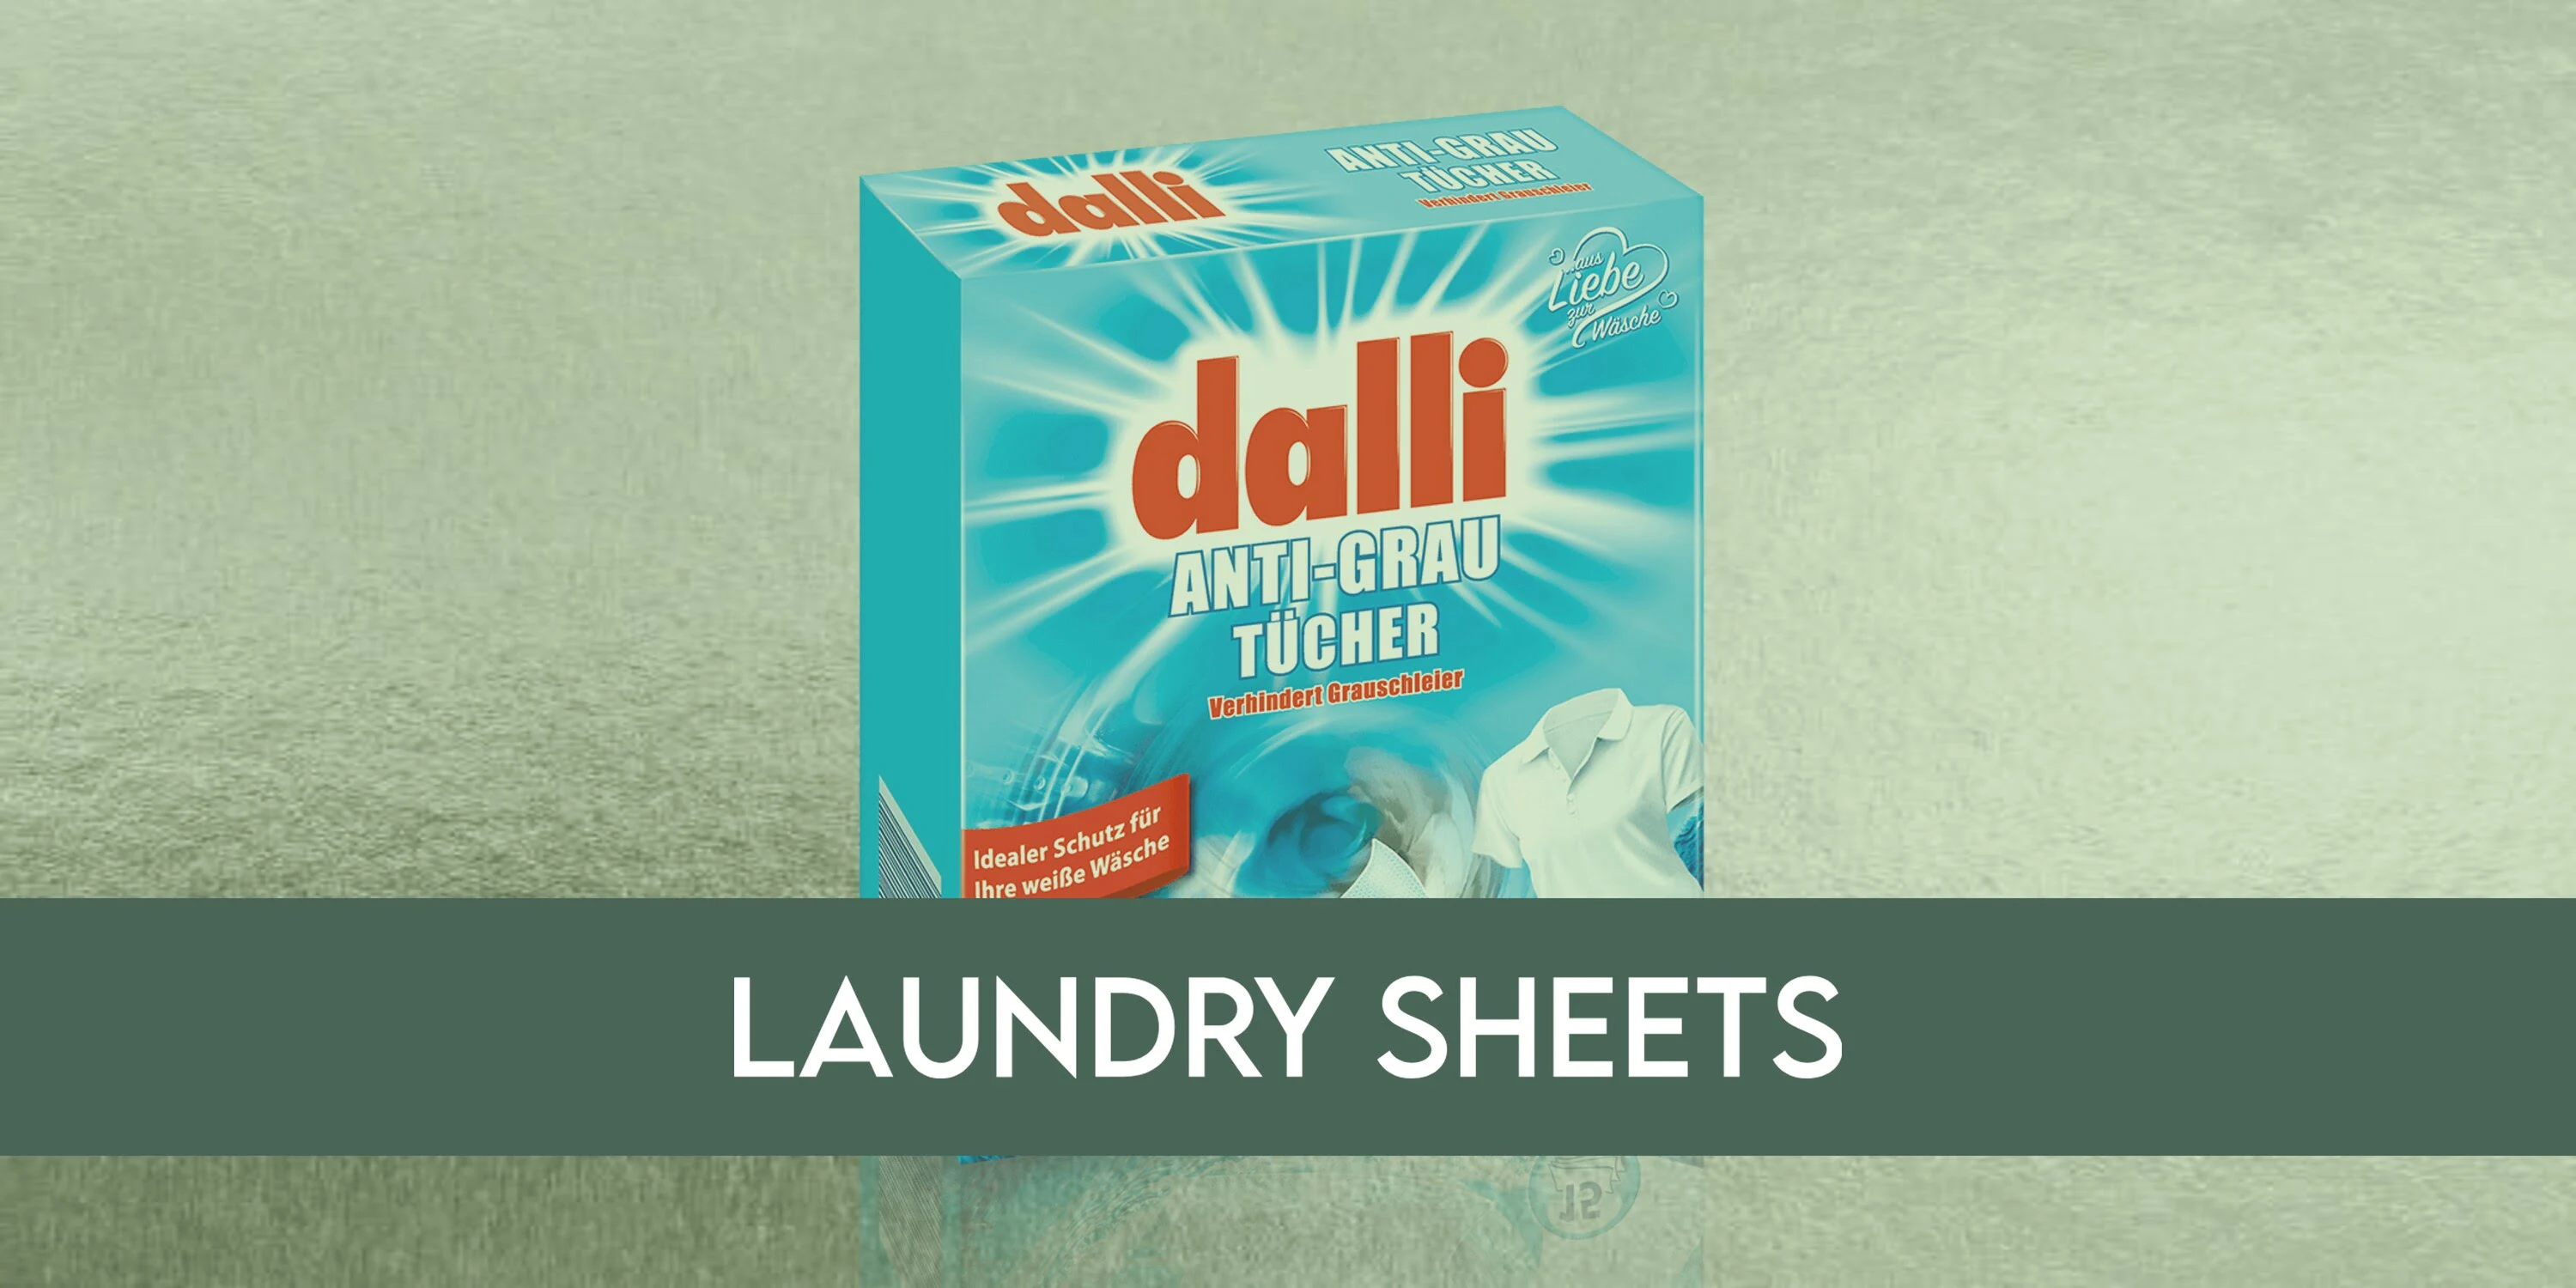 Dalli Fabric Whitener Laundry Sheets